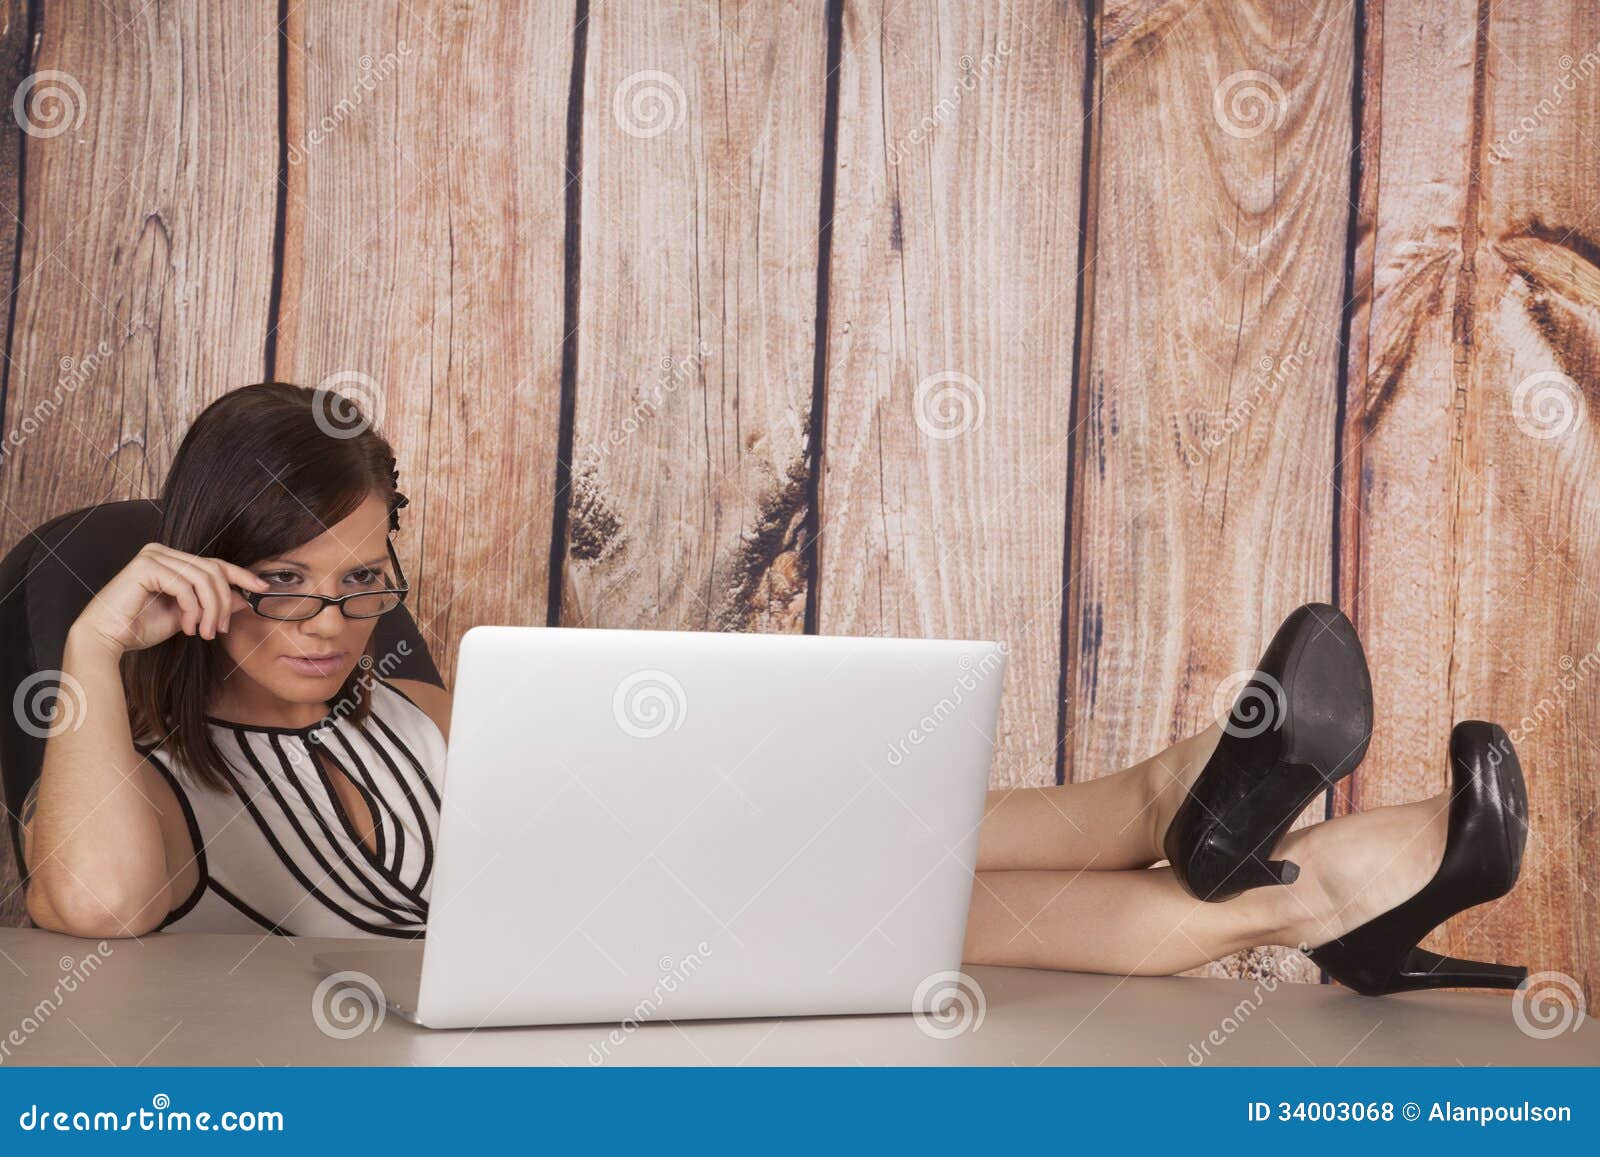 woman-white-dress-computer-wood-sit-legs-up-her-feet-desk-working-her-inside-office-34003068.jpg